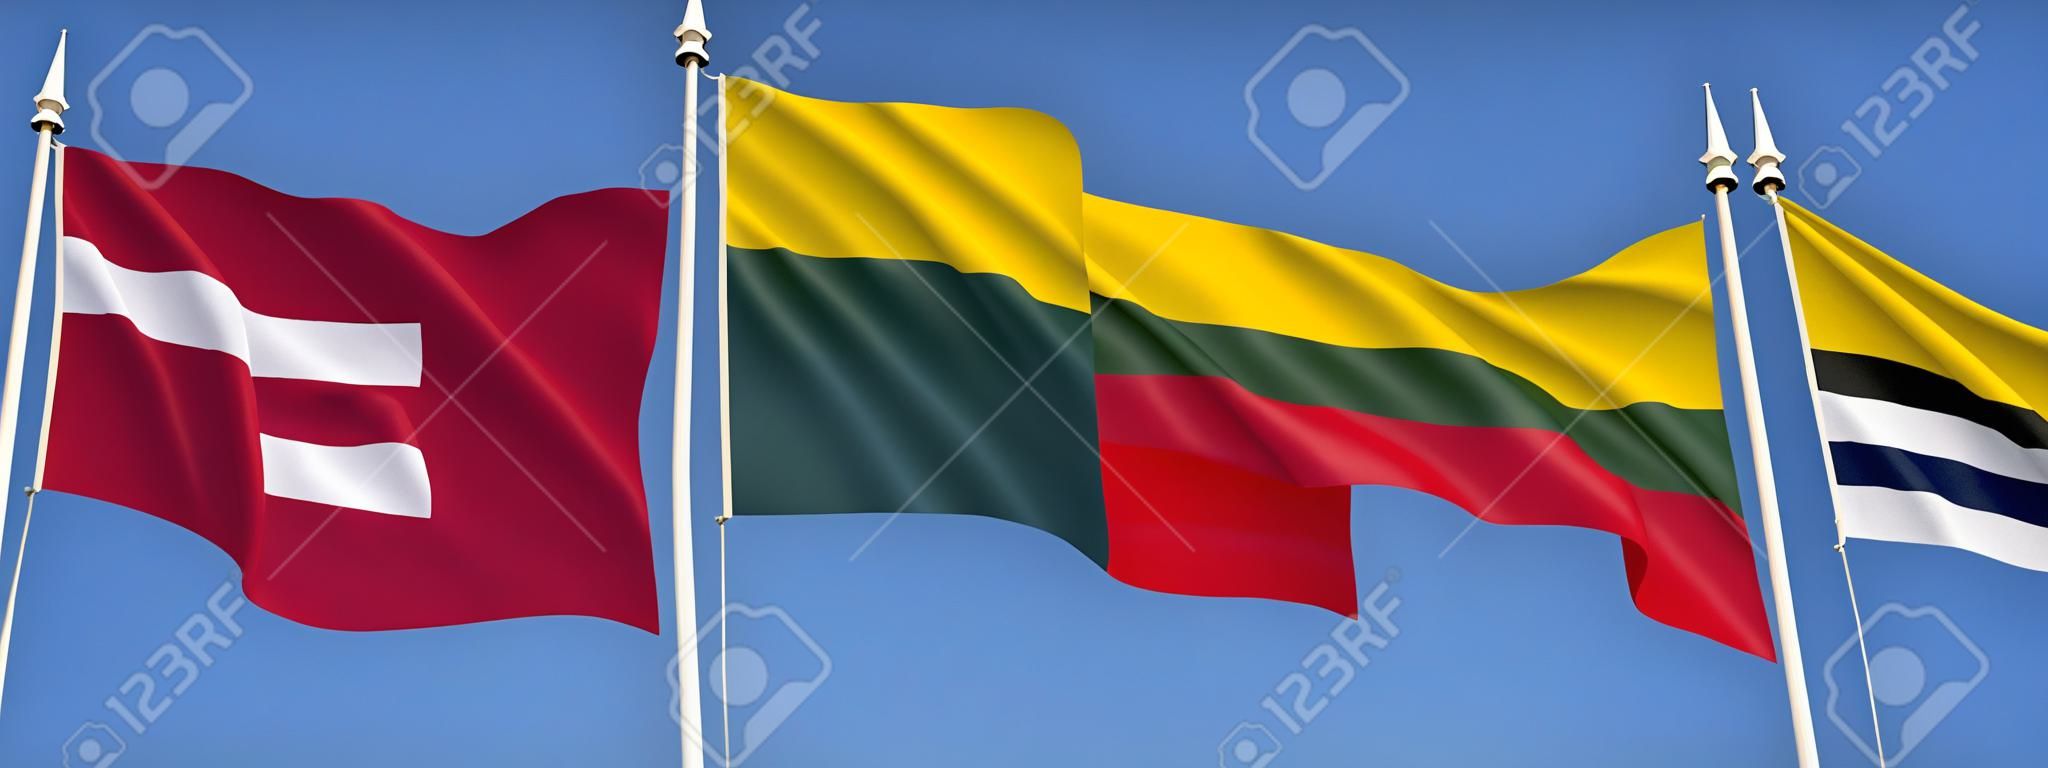 Флаги стран Балтии - Латвии, Литве и Эстонии.